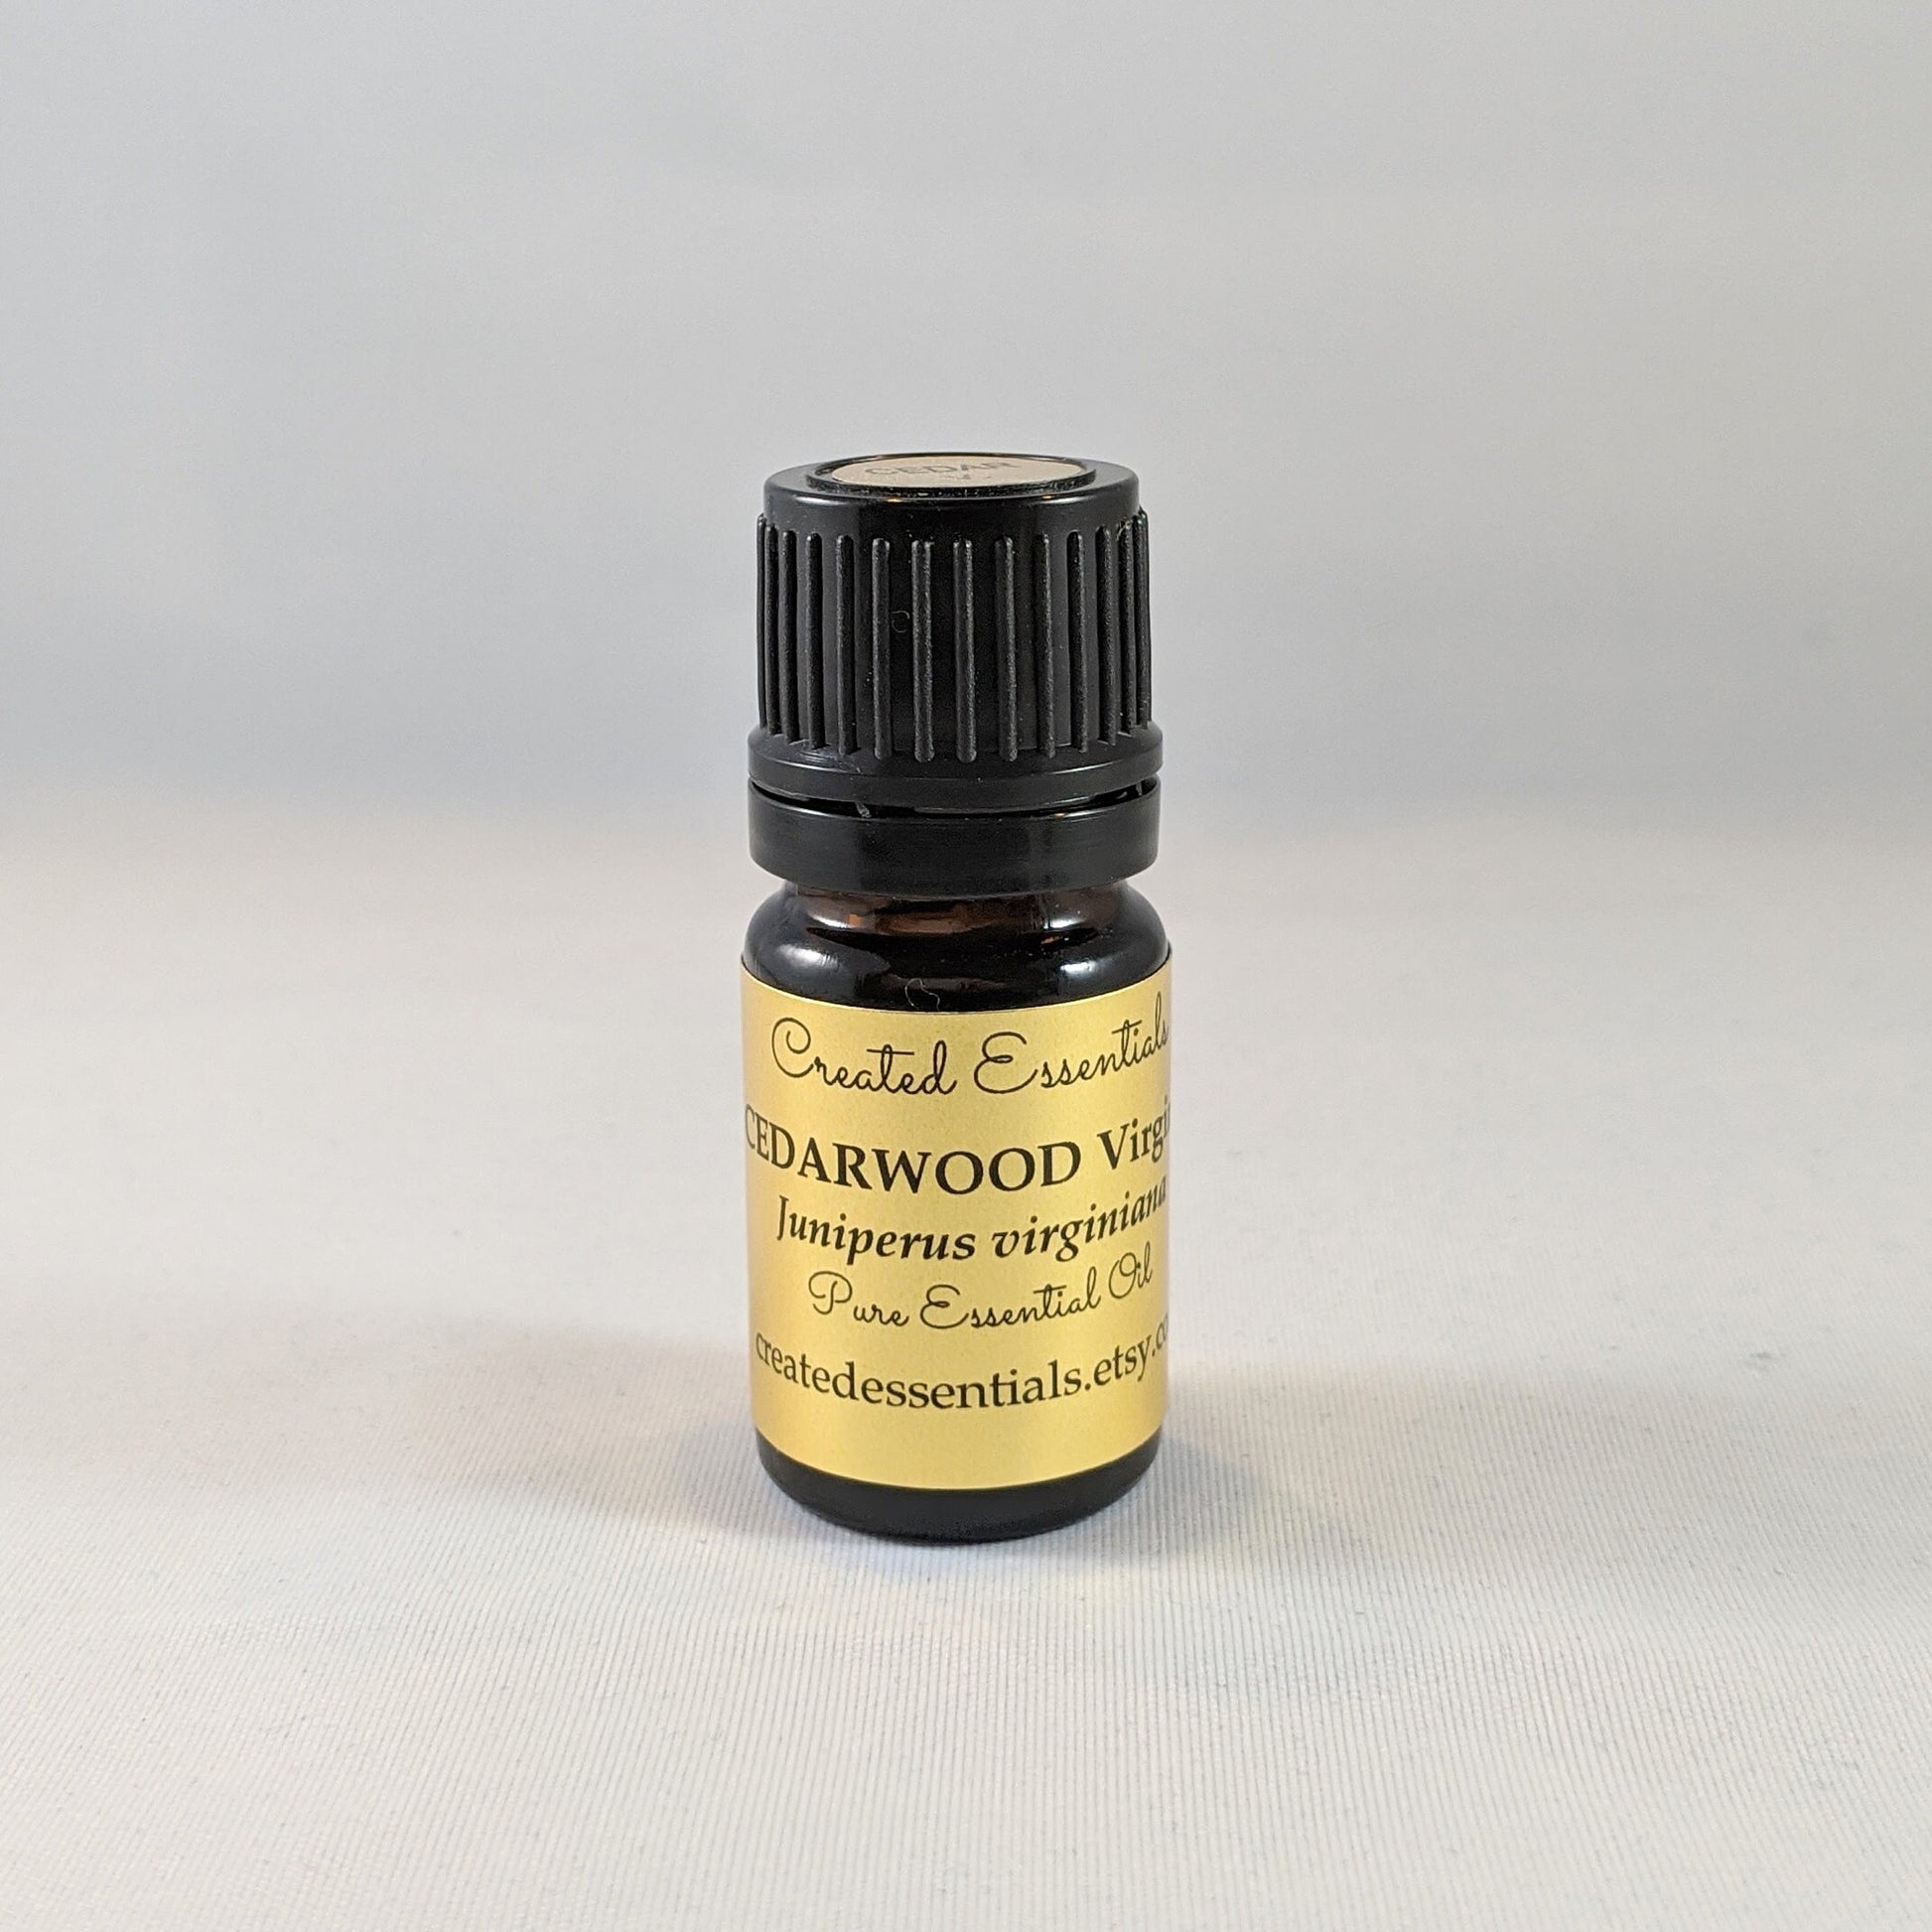 Cedarwood Virginia Essential Oil | Wildcrafted Virginia Cedarwood Essential Oil | Pure Essential Oil | Therapeutic Virginia Cedarwood